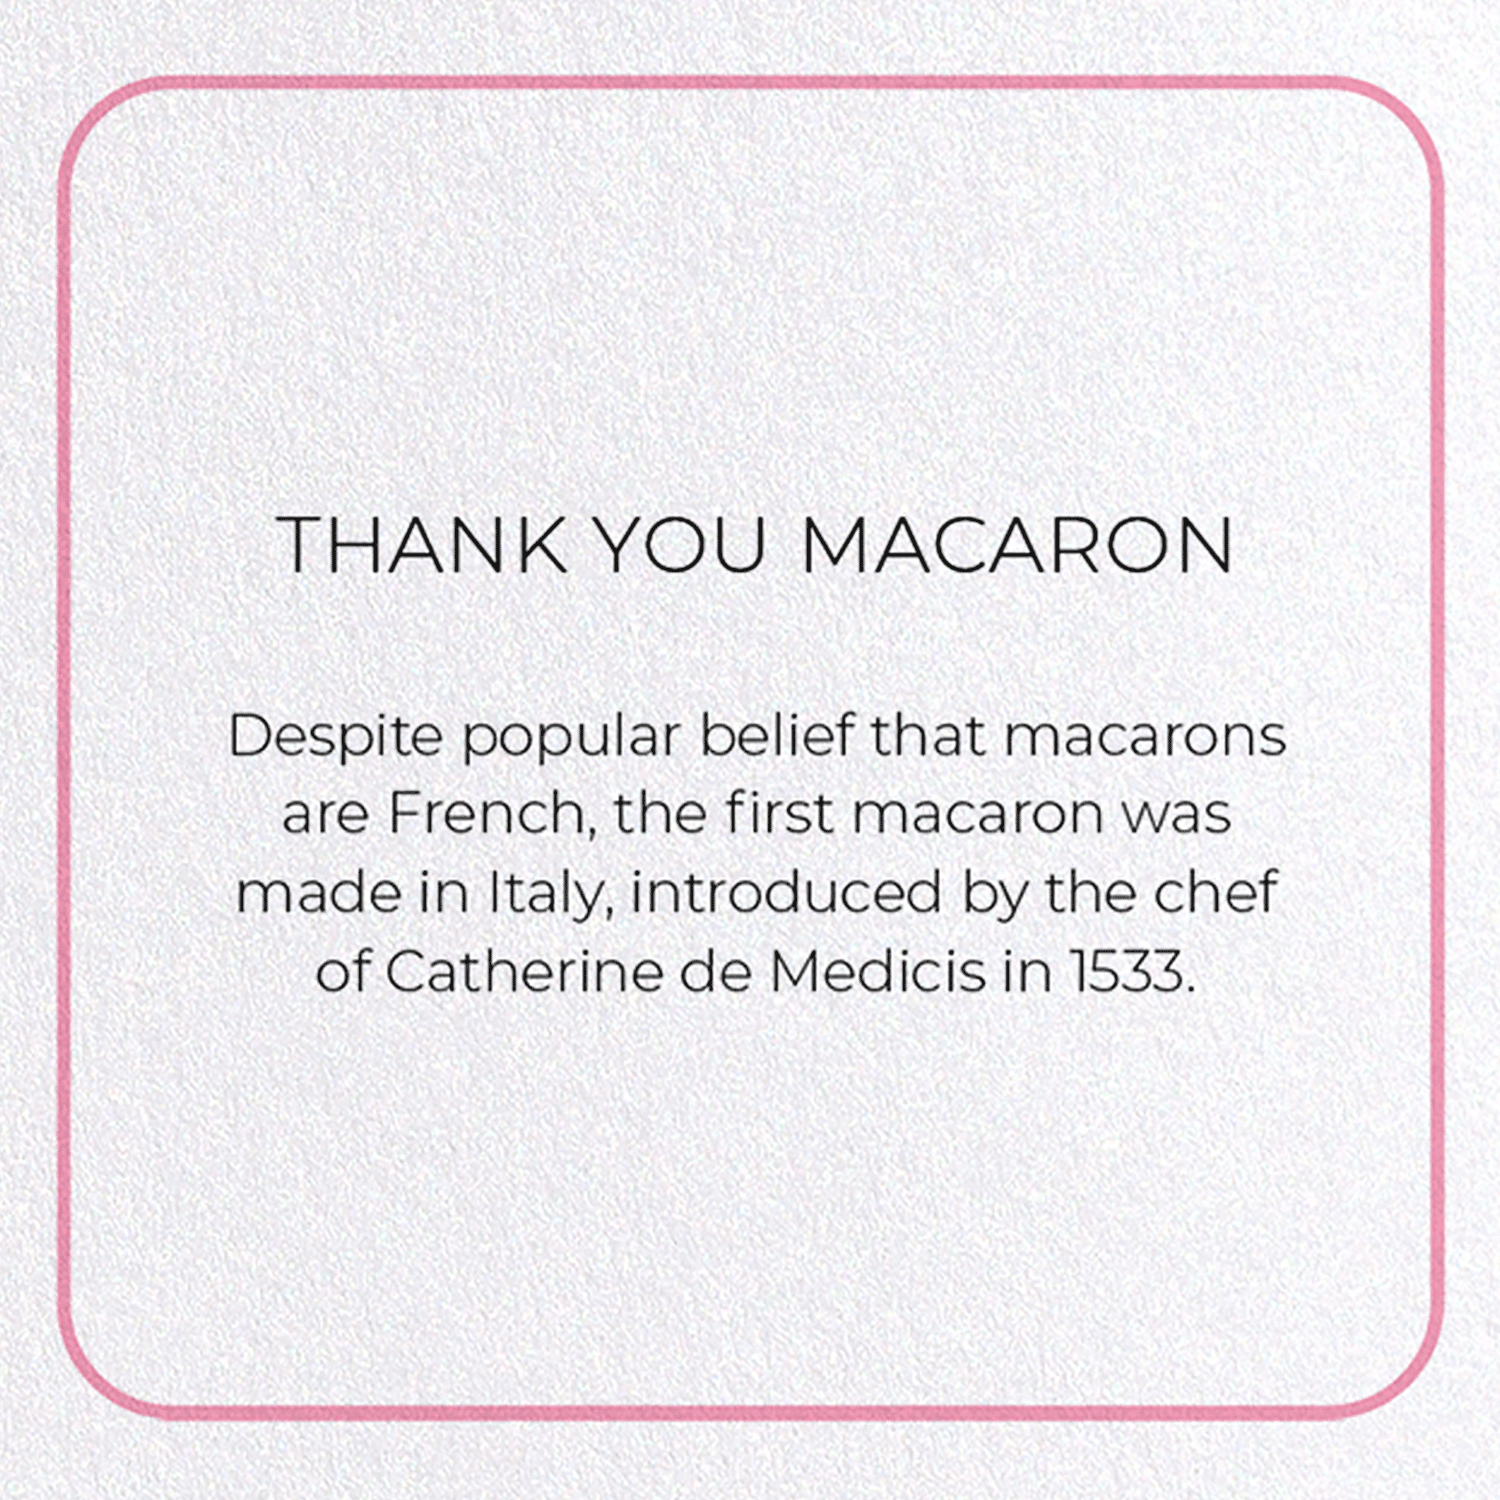 THANK YOU MACARON: Photo Greeting Card